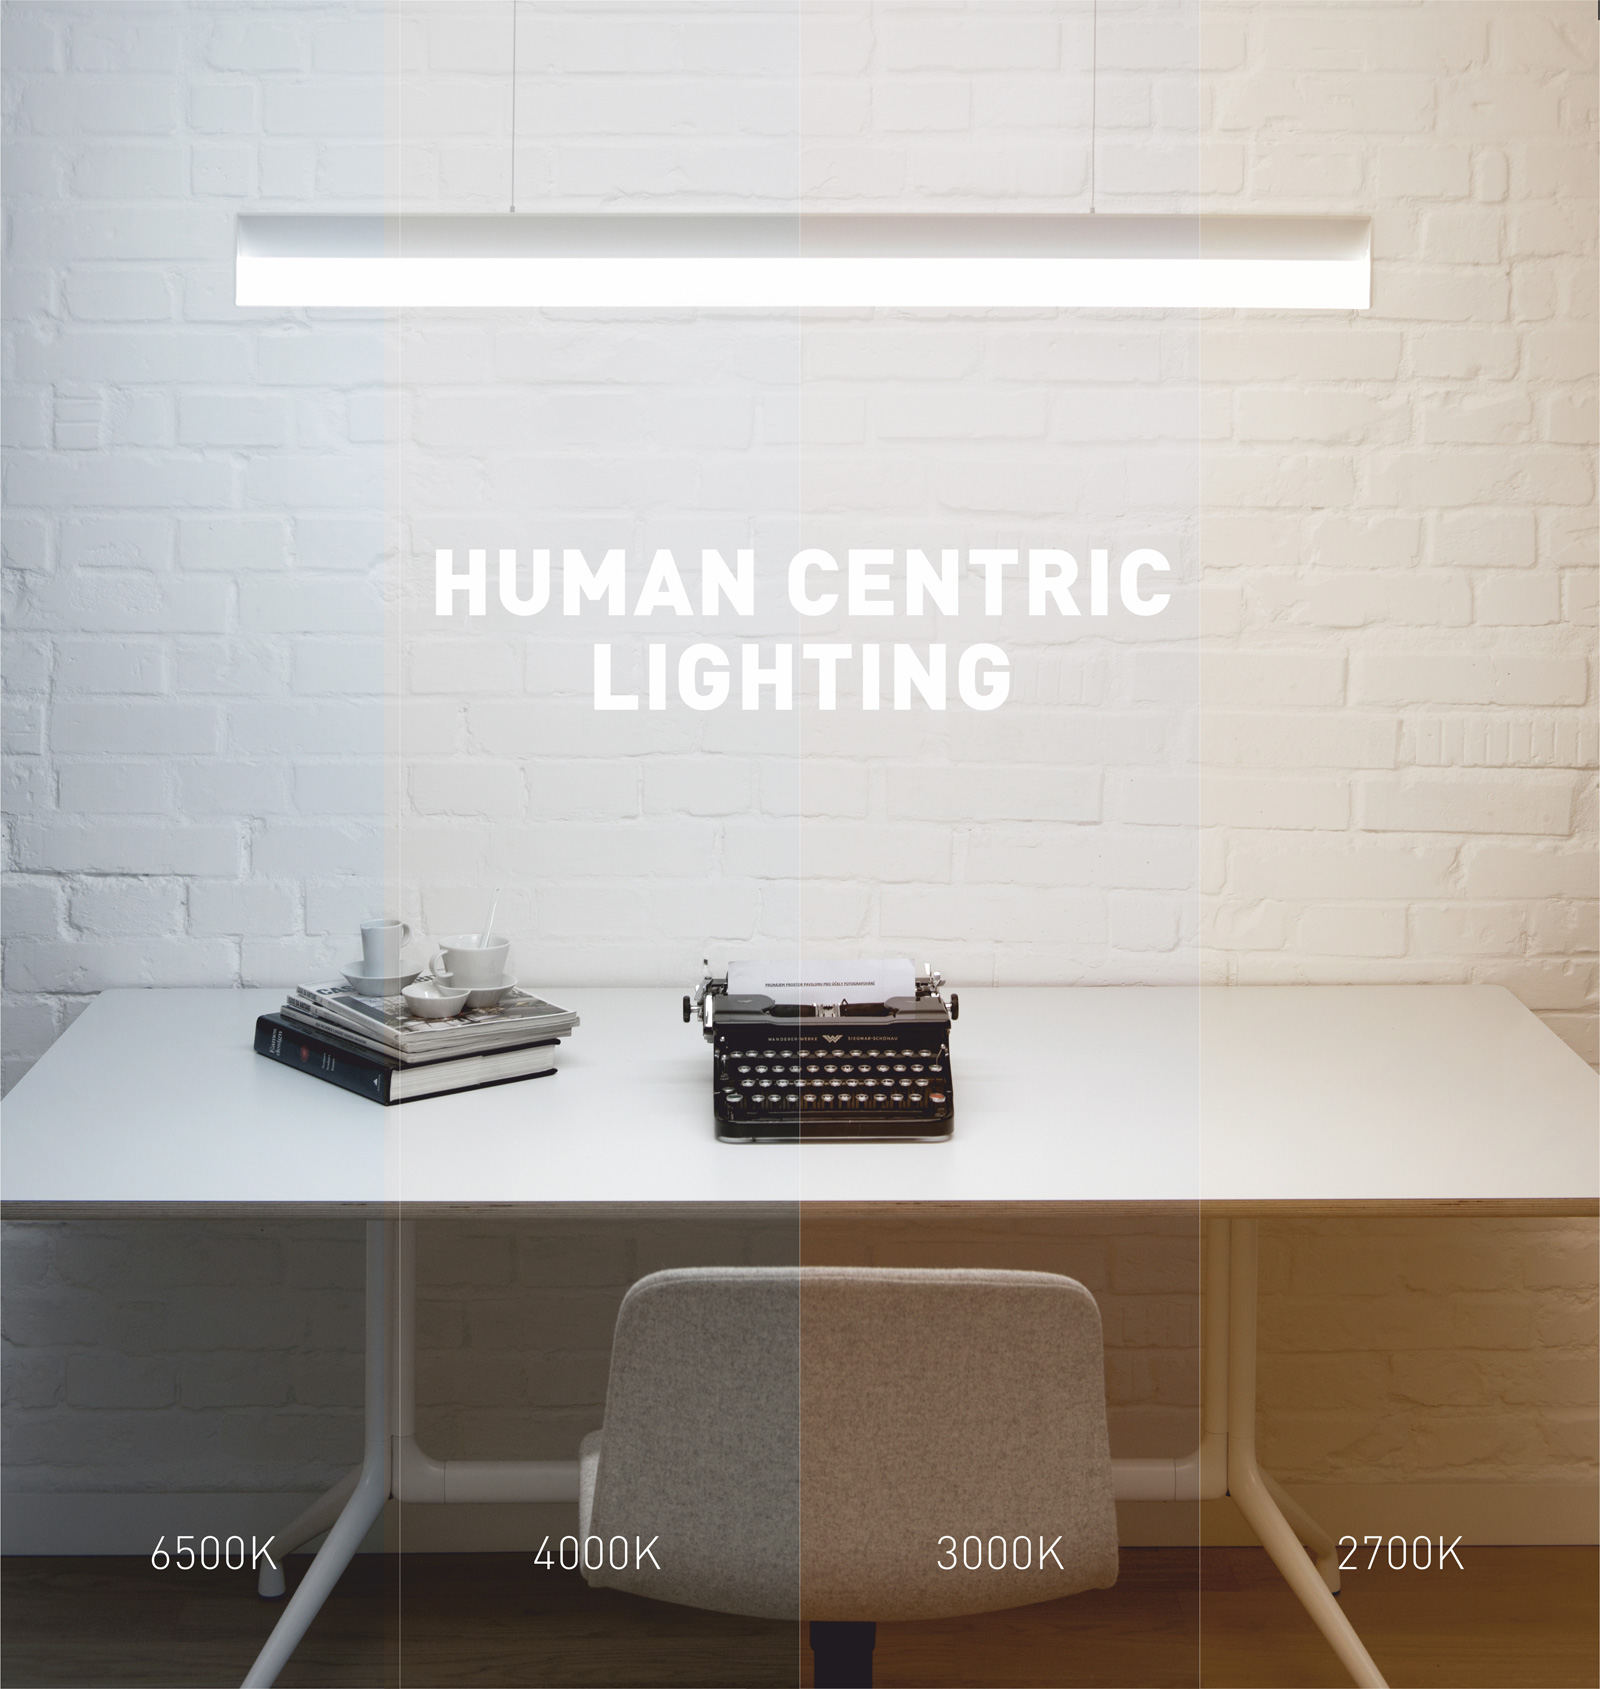 Human Centric Lighting